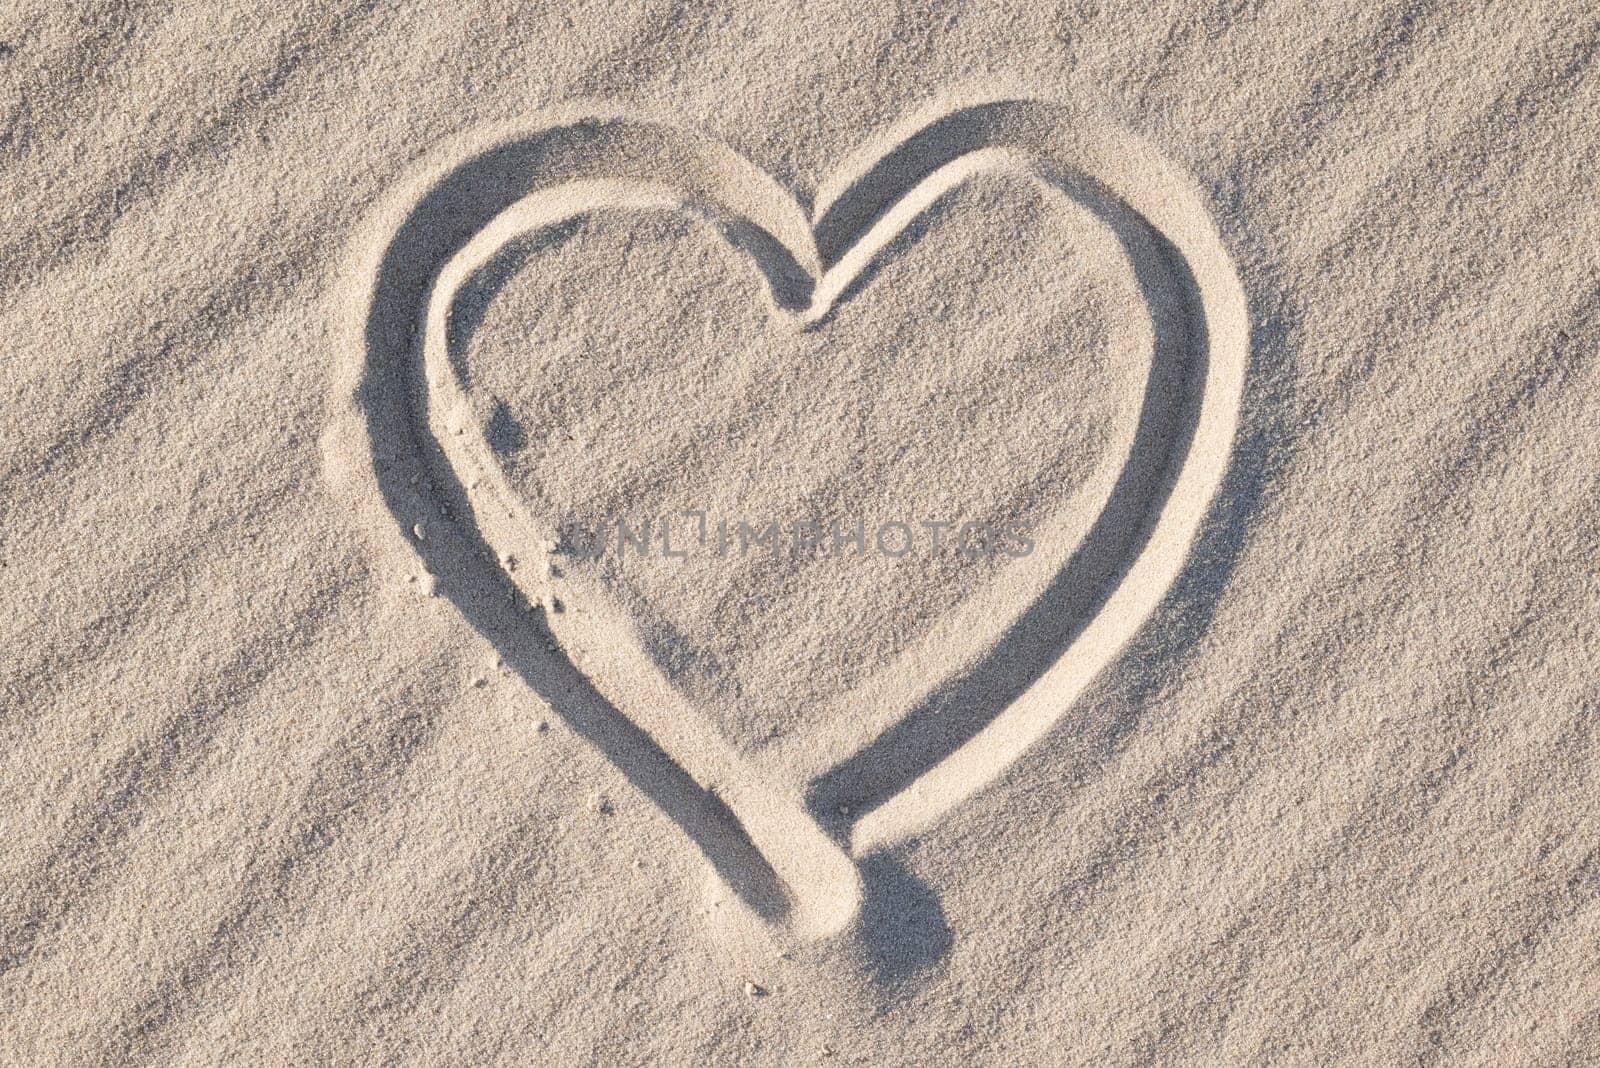 Heart shape in sand by VitaliiPetrushenko